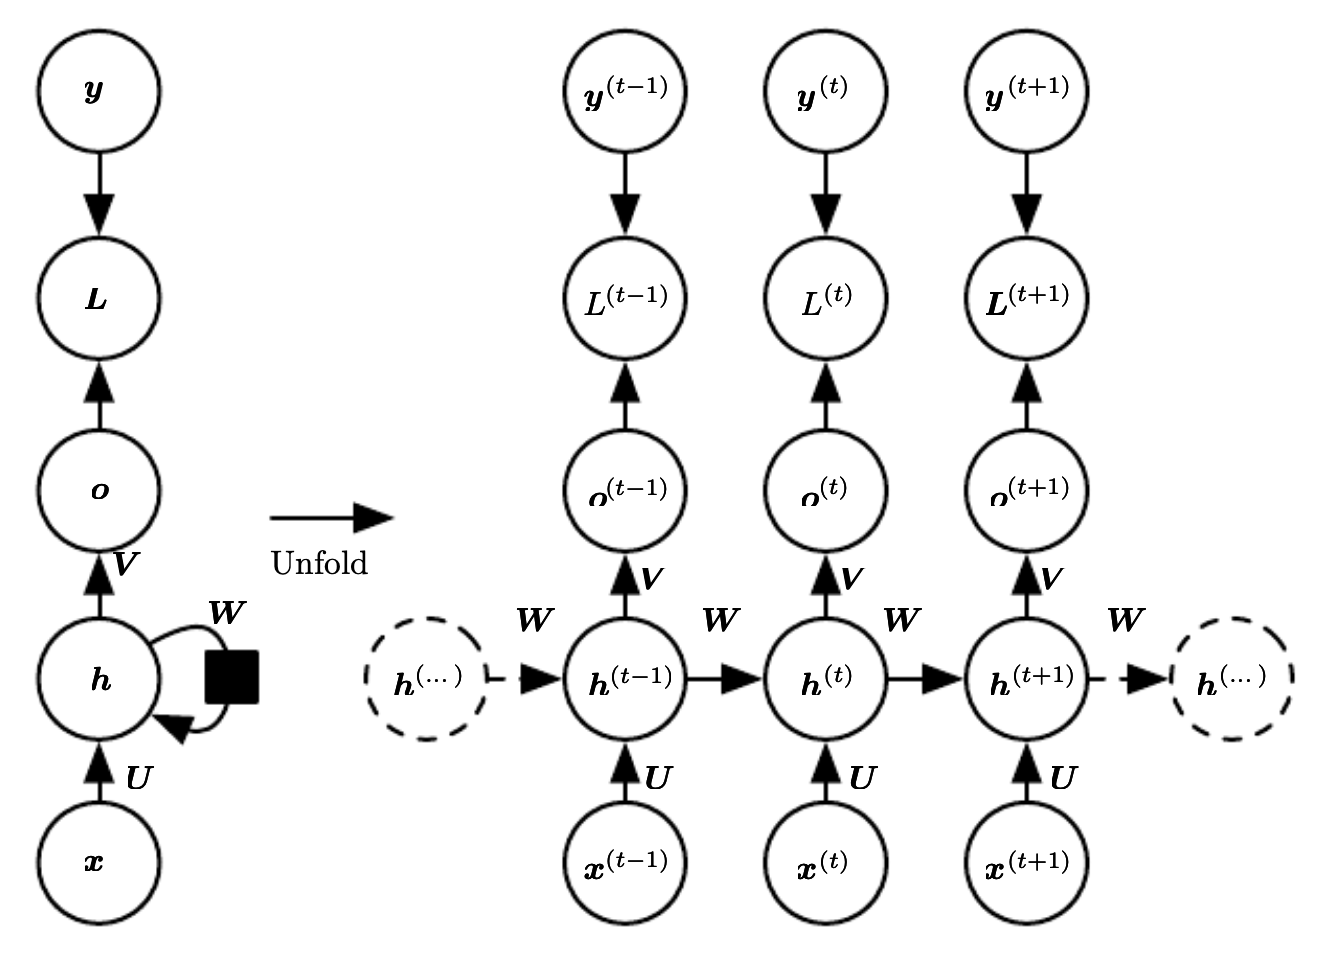 Computational Graph with an Unfolded RNN